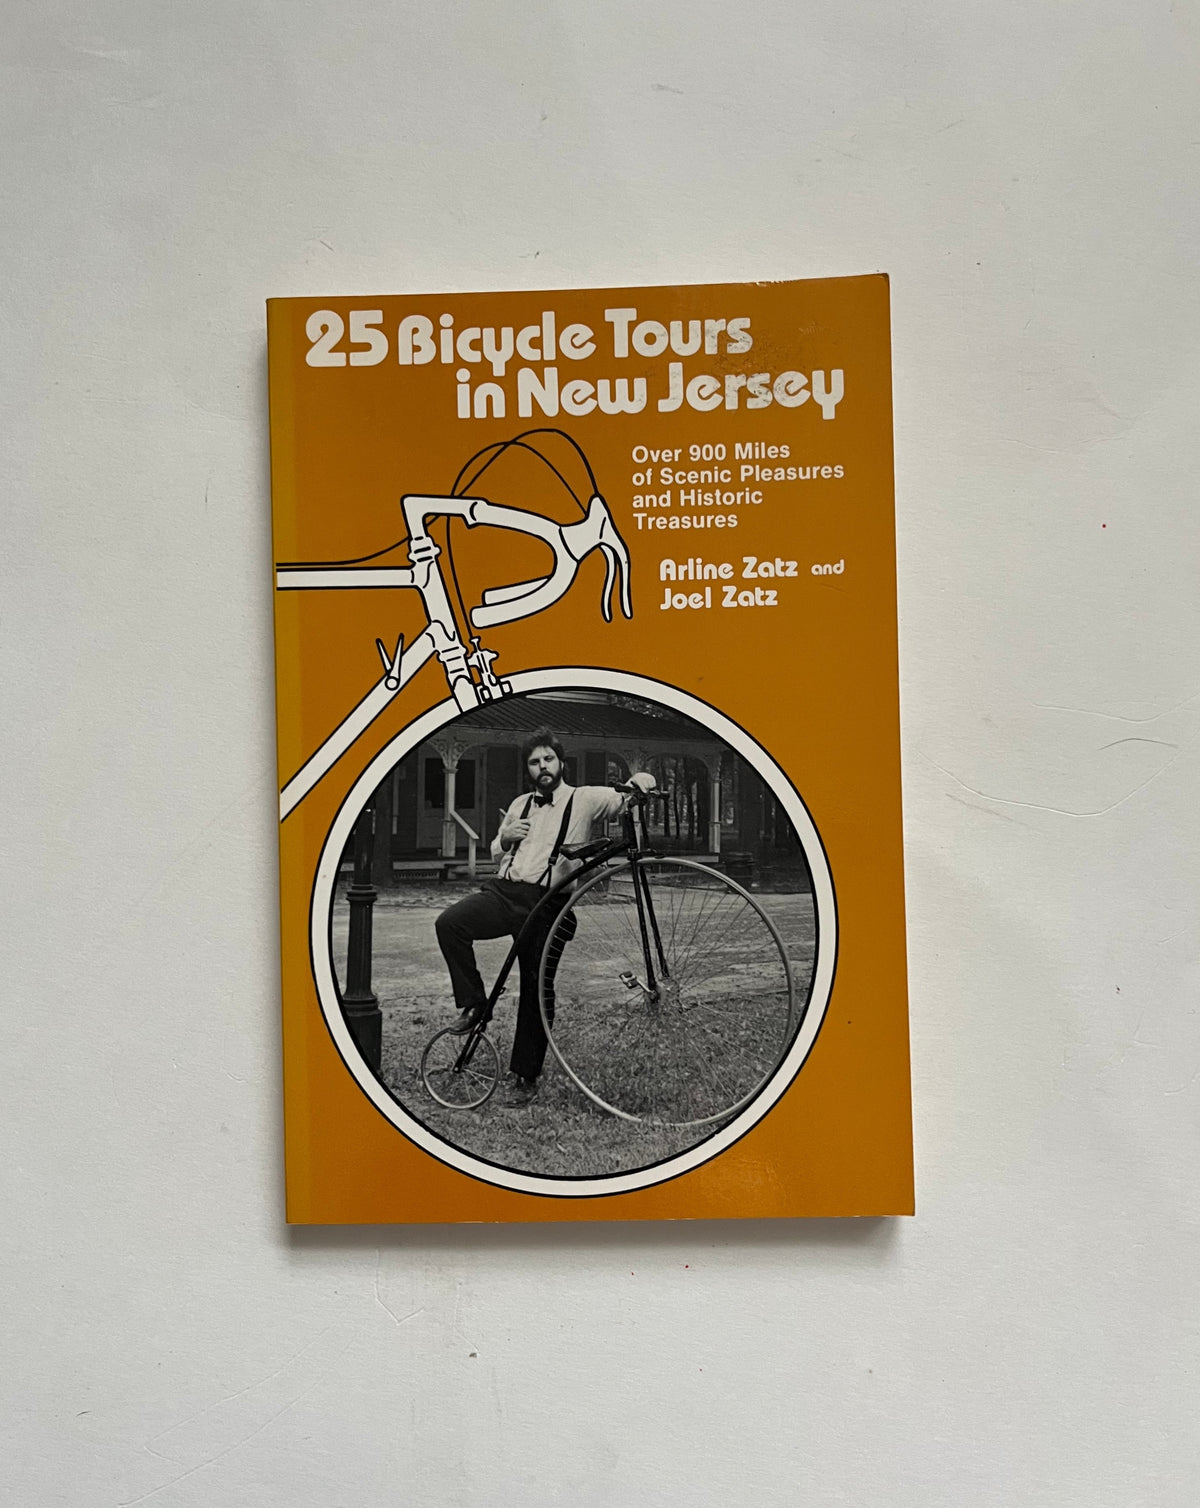 25 Bicycle Tours in New Jersey: Over 900 Miles of Scenic Pleasures and Historic Treasures by Arline Zatz and Joel Zats